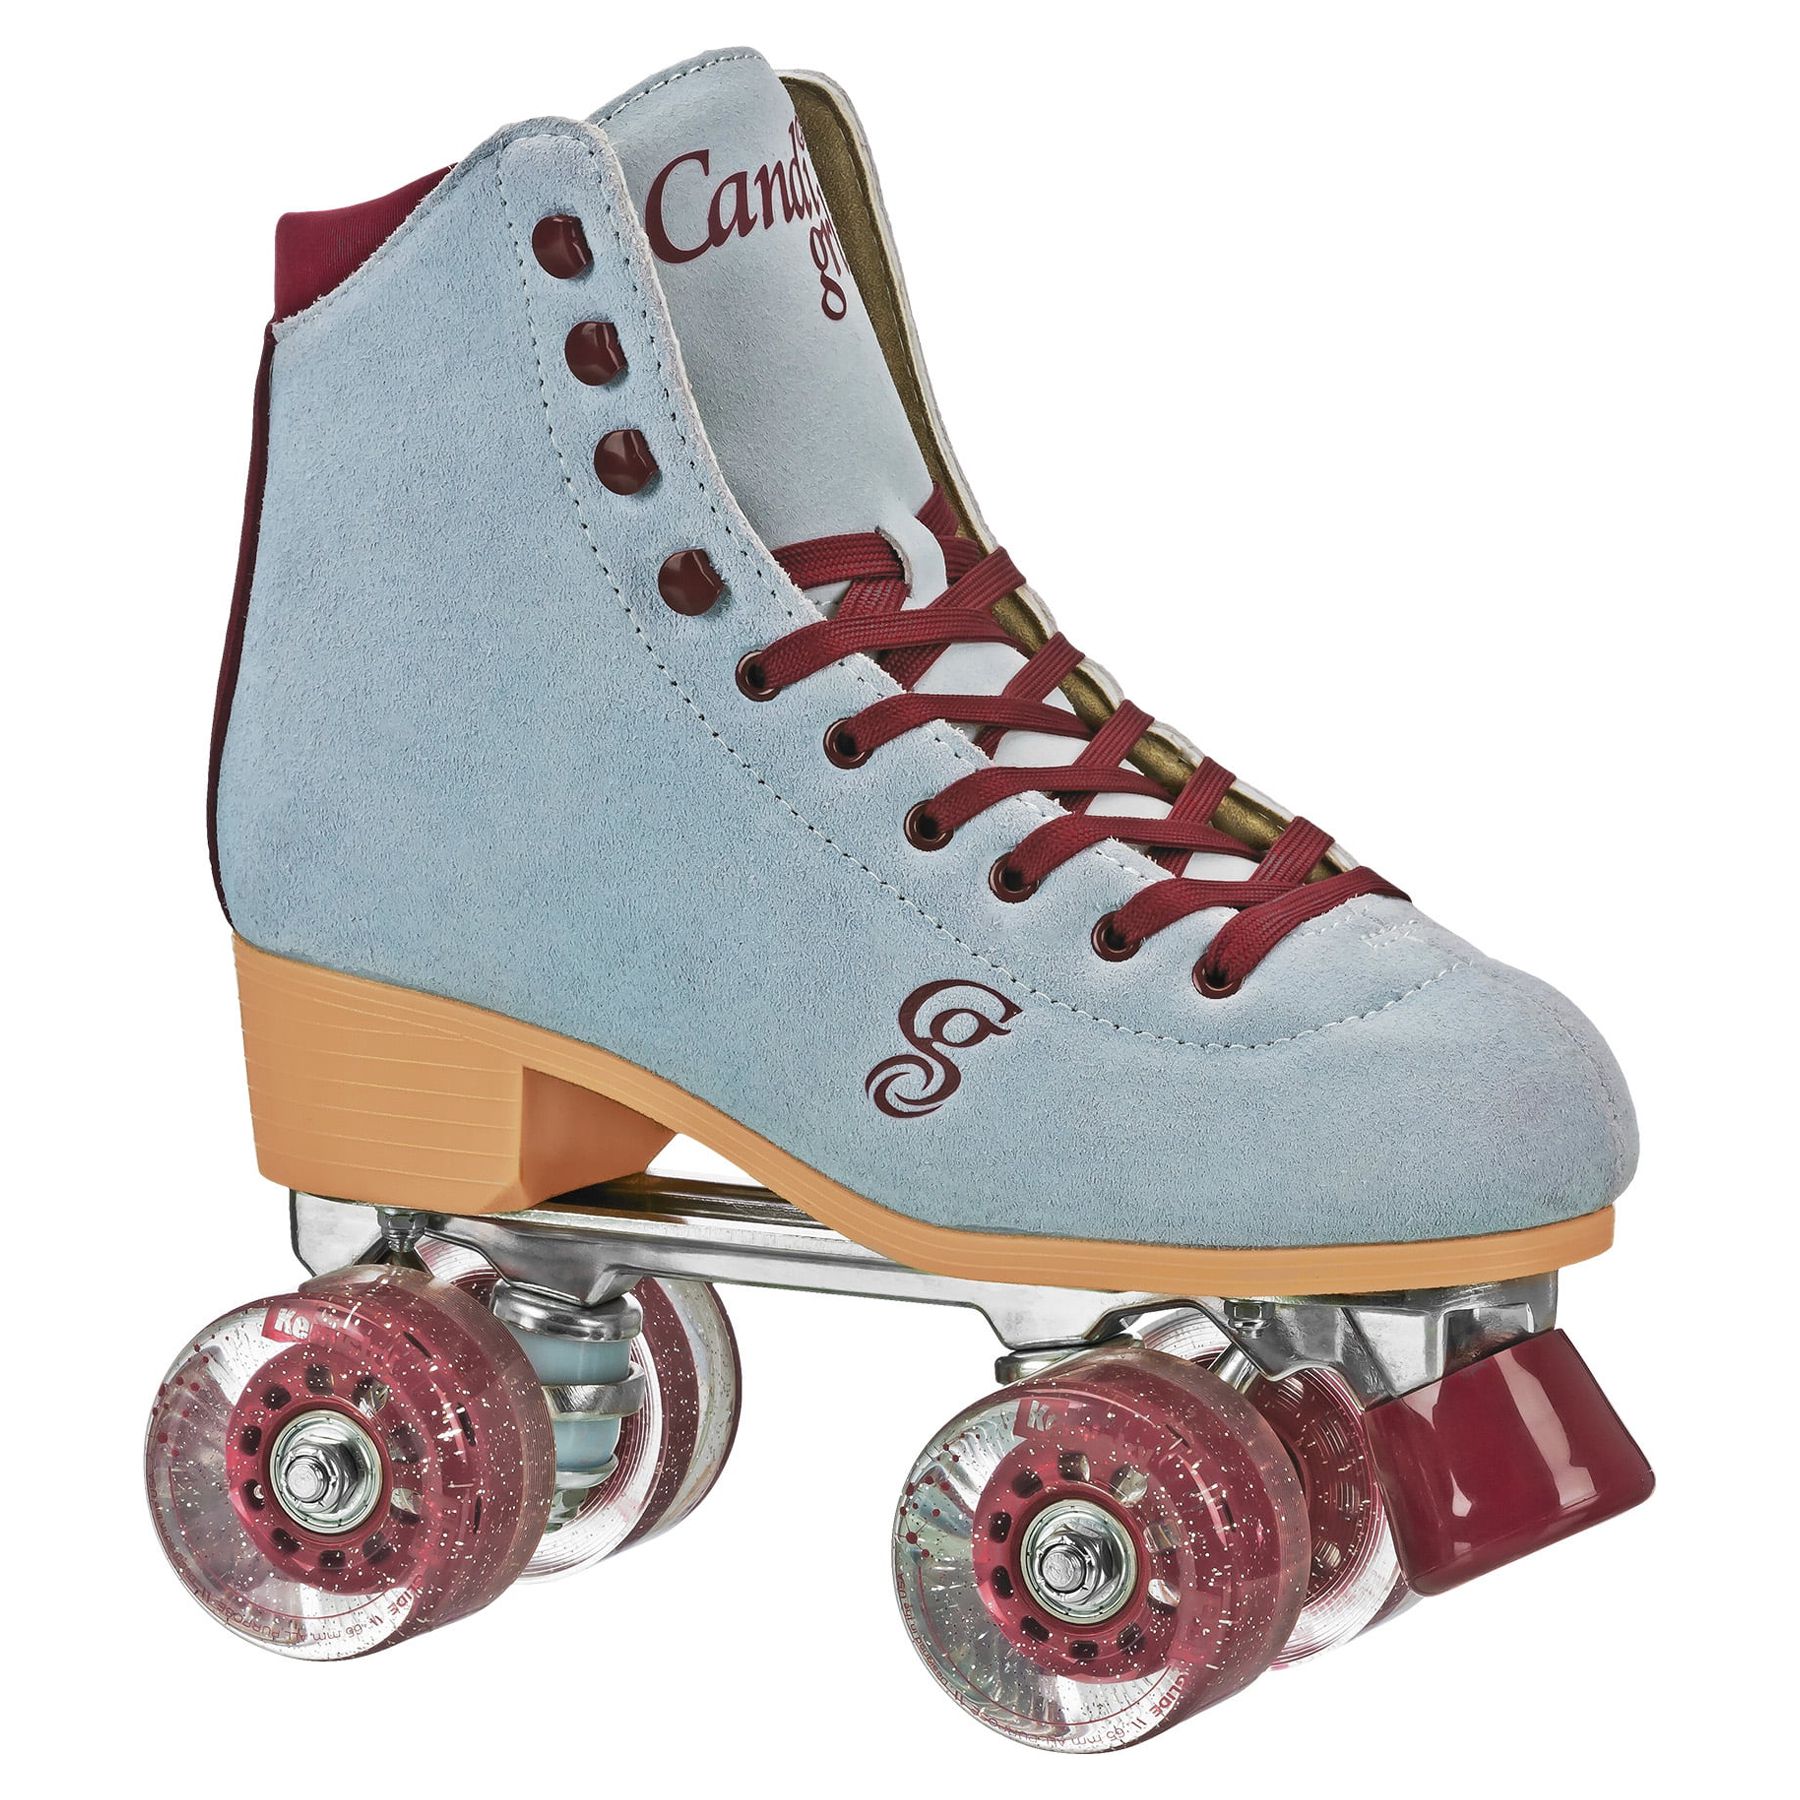 Roller Derby Candi Girl Carlin Women's Roller Skates - image 1 of 5